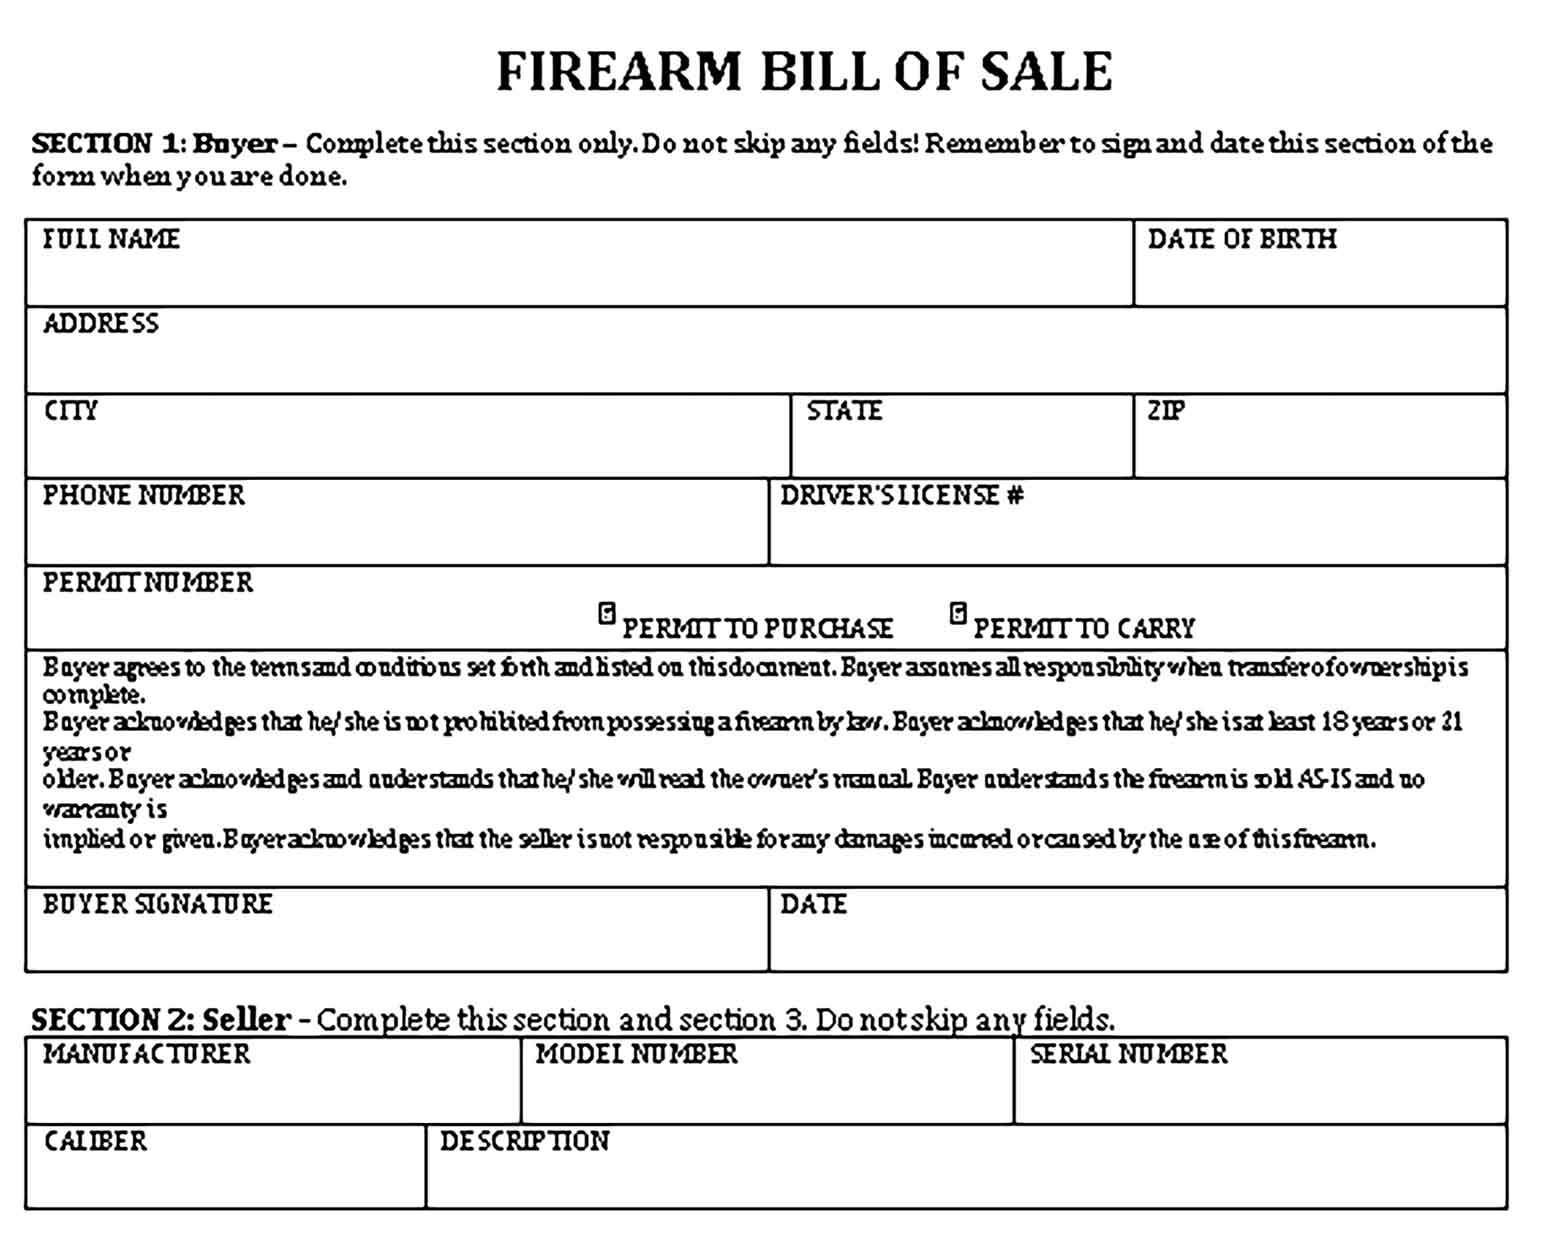 Sample firearm bill of sale free Templates